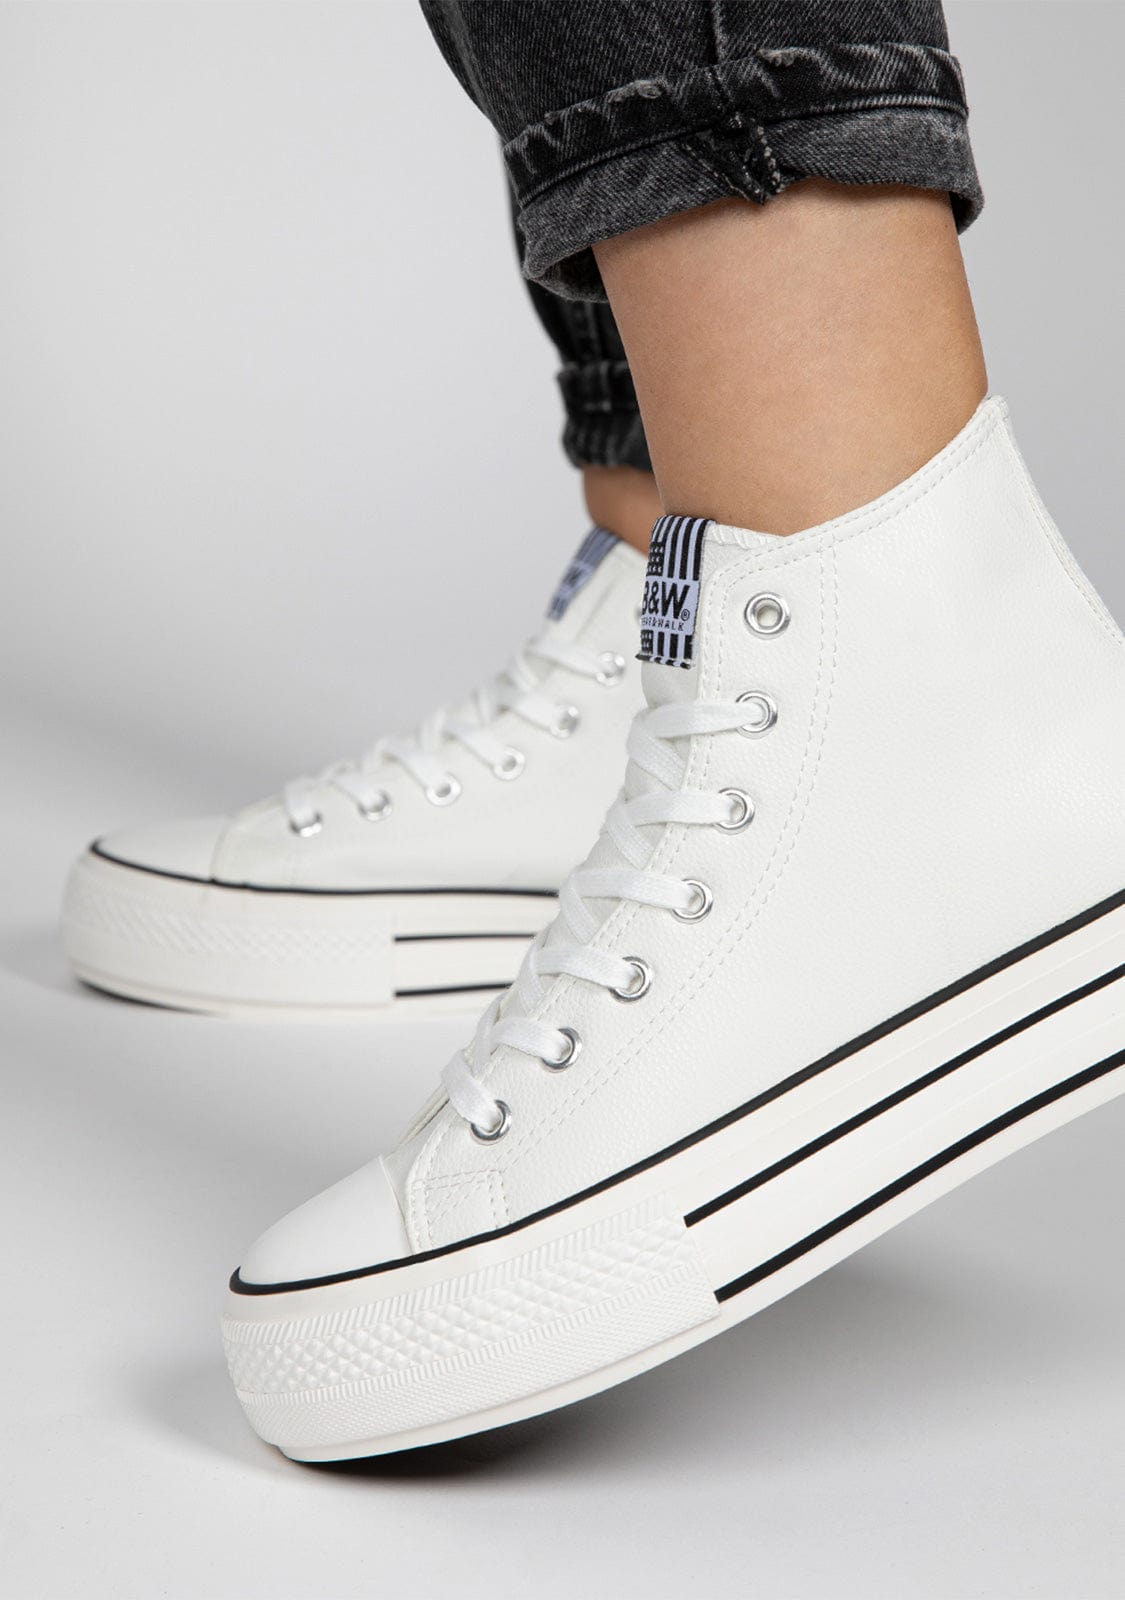 B & W Shoes White Platform Hi-Top Sneakers